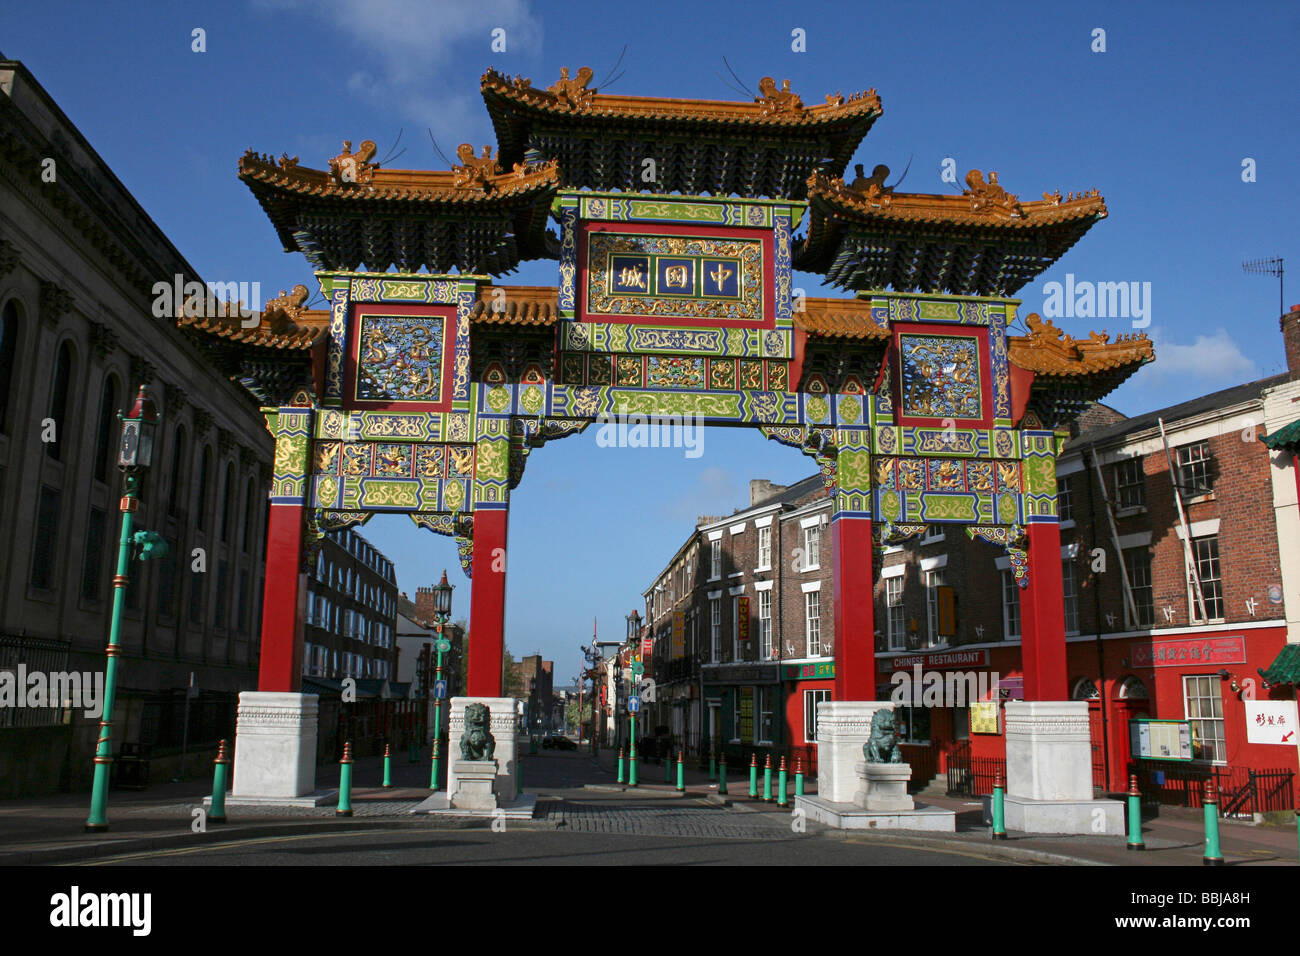 The Chinese Arch, Chinatown, Liverpool, Merseyside, UK Stock Photo